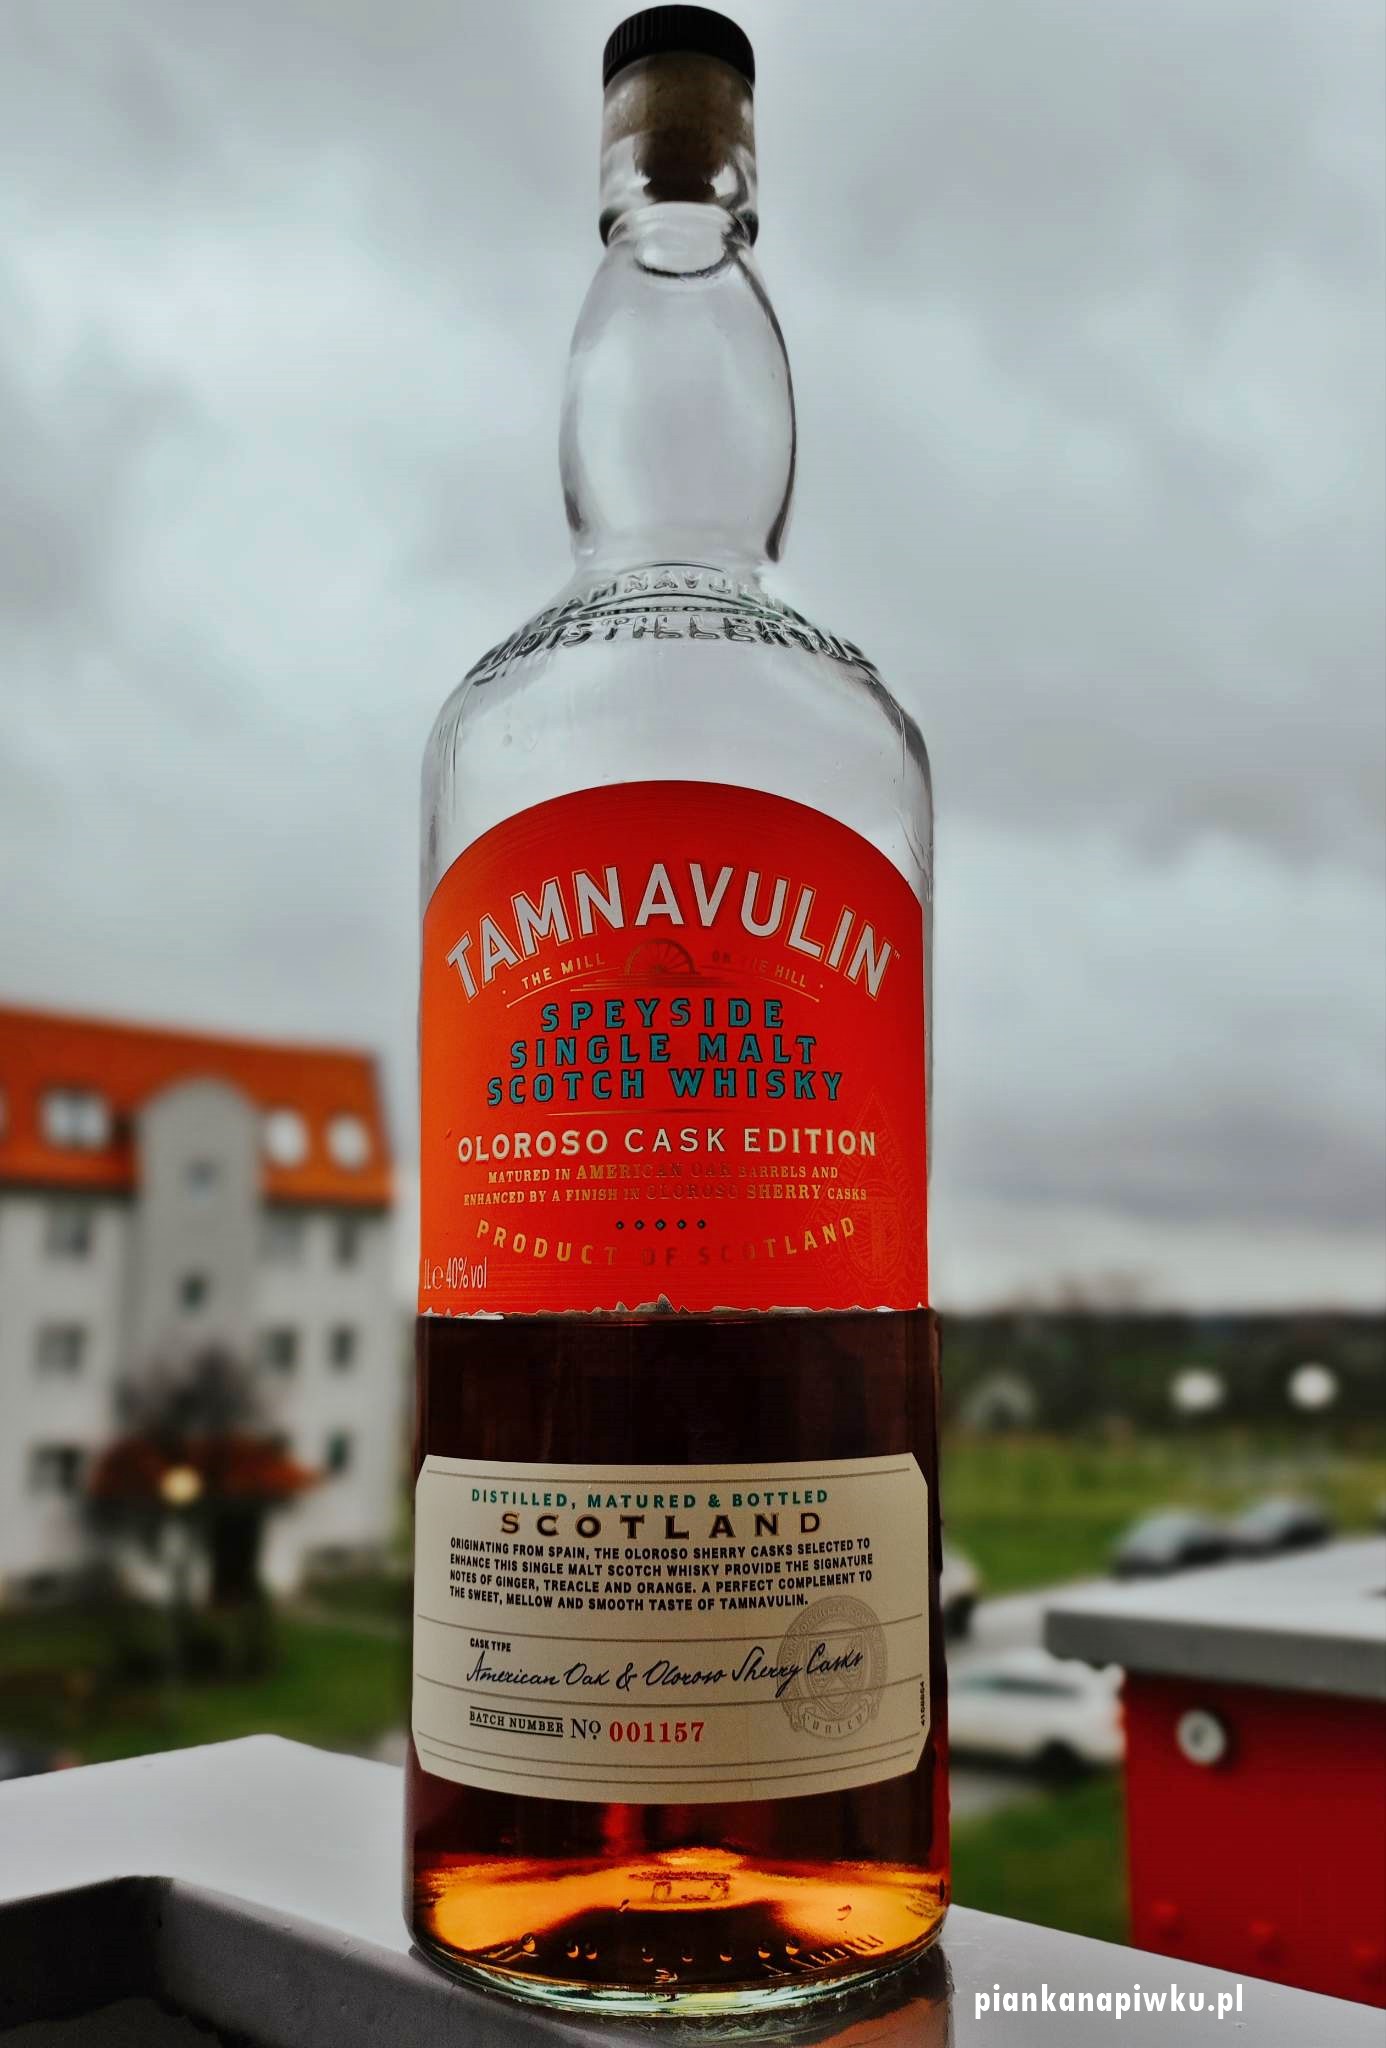 TAMNAVULIN Speyside Single Malt Scotch Whisky Oloroso Cask Edition 40 % - blog o szkockiej whisky